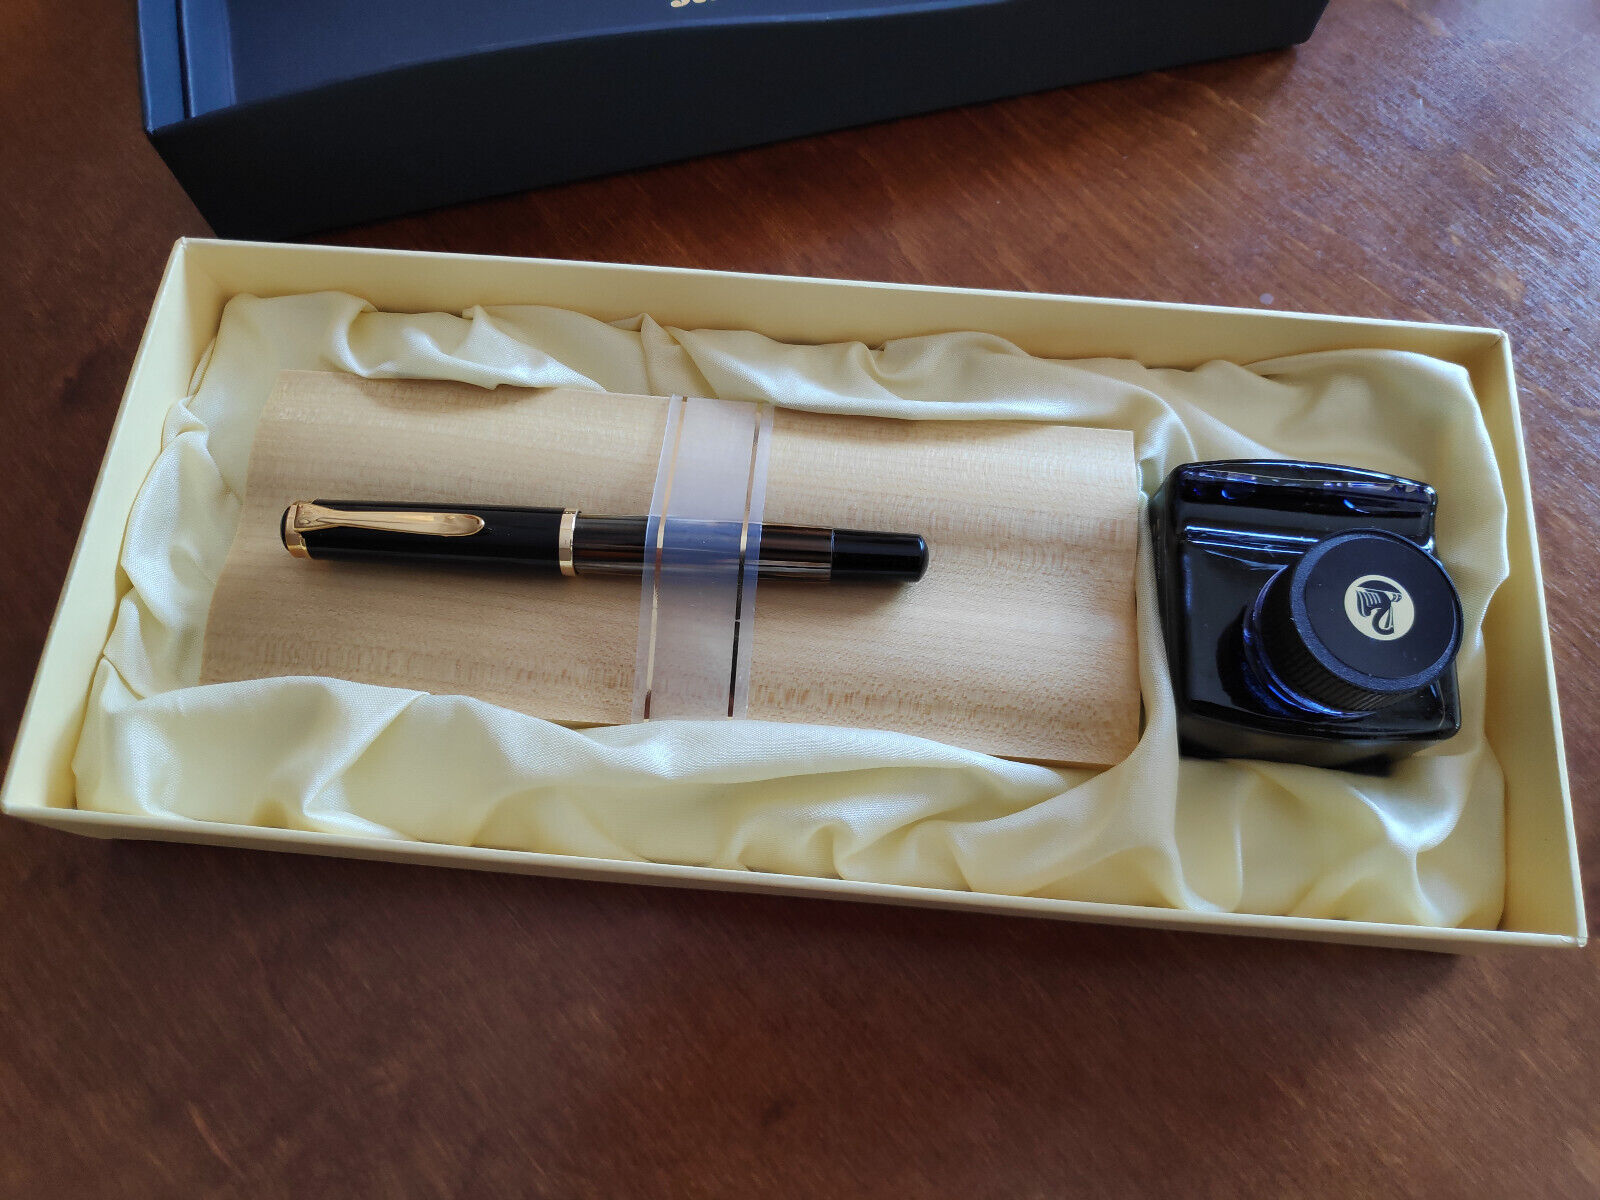 Pelikan fountain pen M400 Set Tortoiseshell Brown Gold Nib with Ink, luxury box